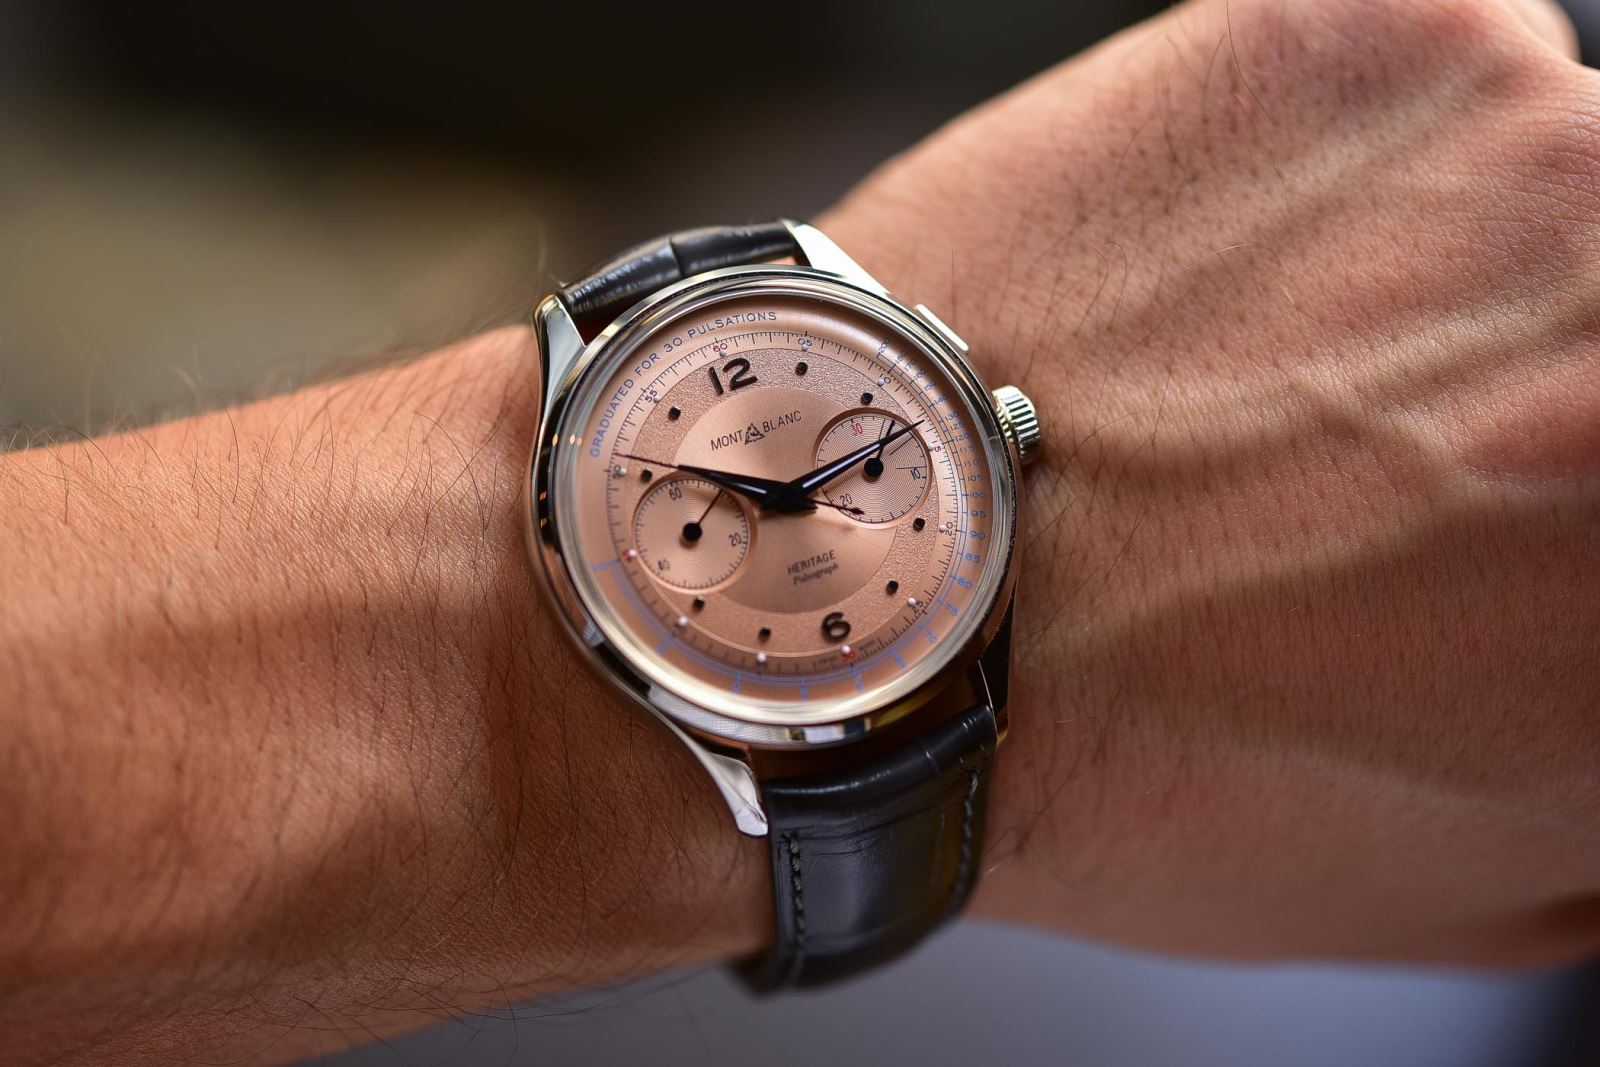 Đồng hồ bấm giờ Montblanc Heritage Pulsometer ra mắt tại SIHH 2019